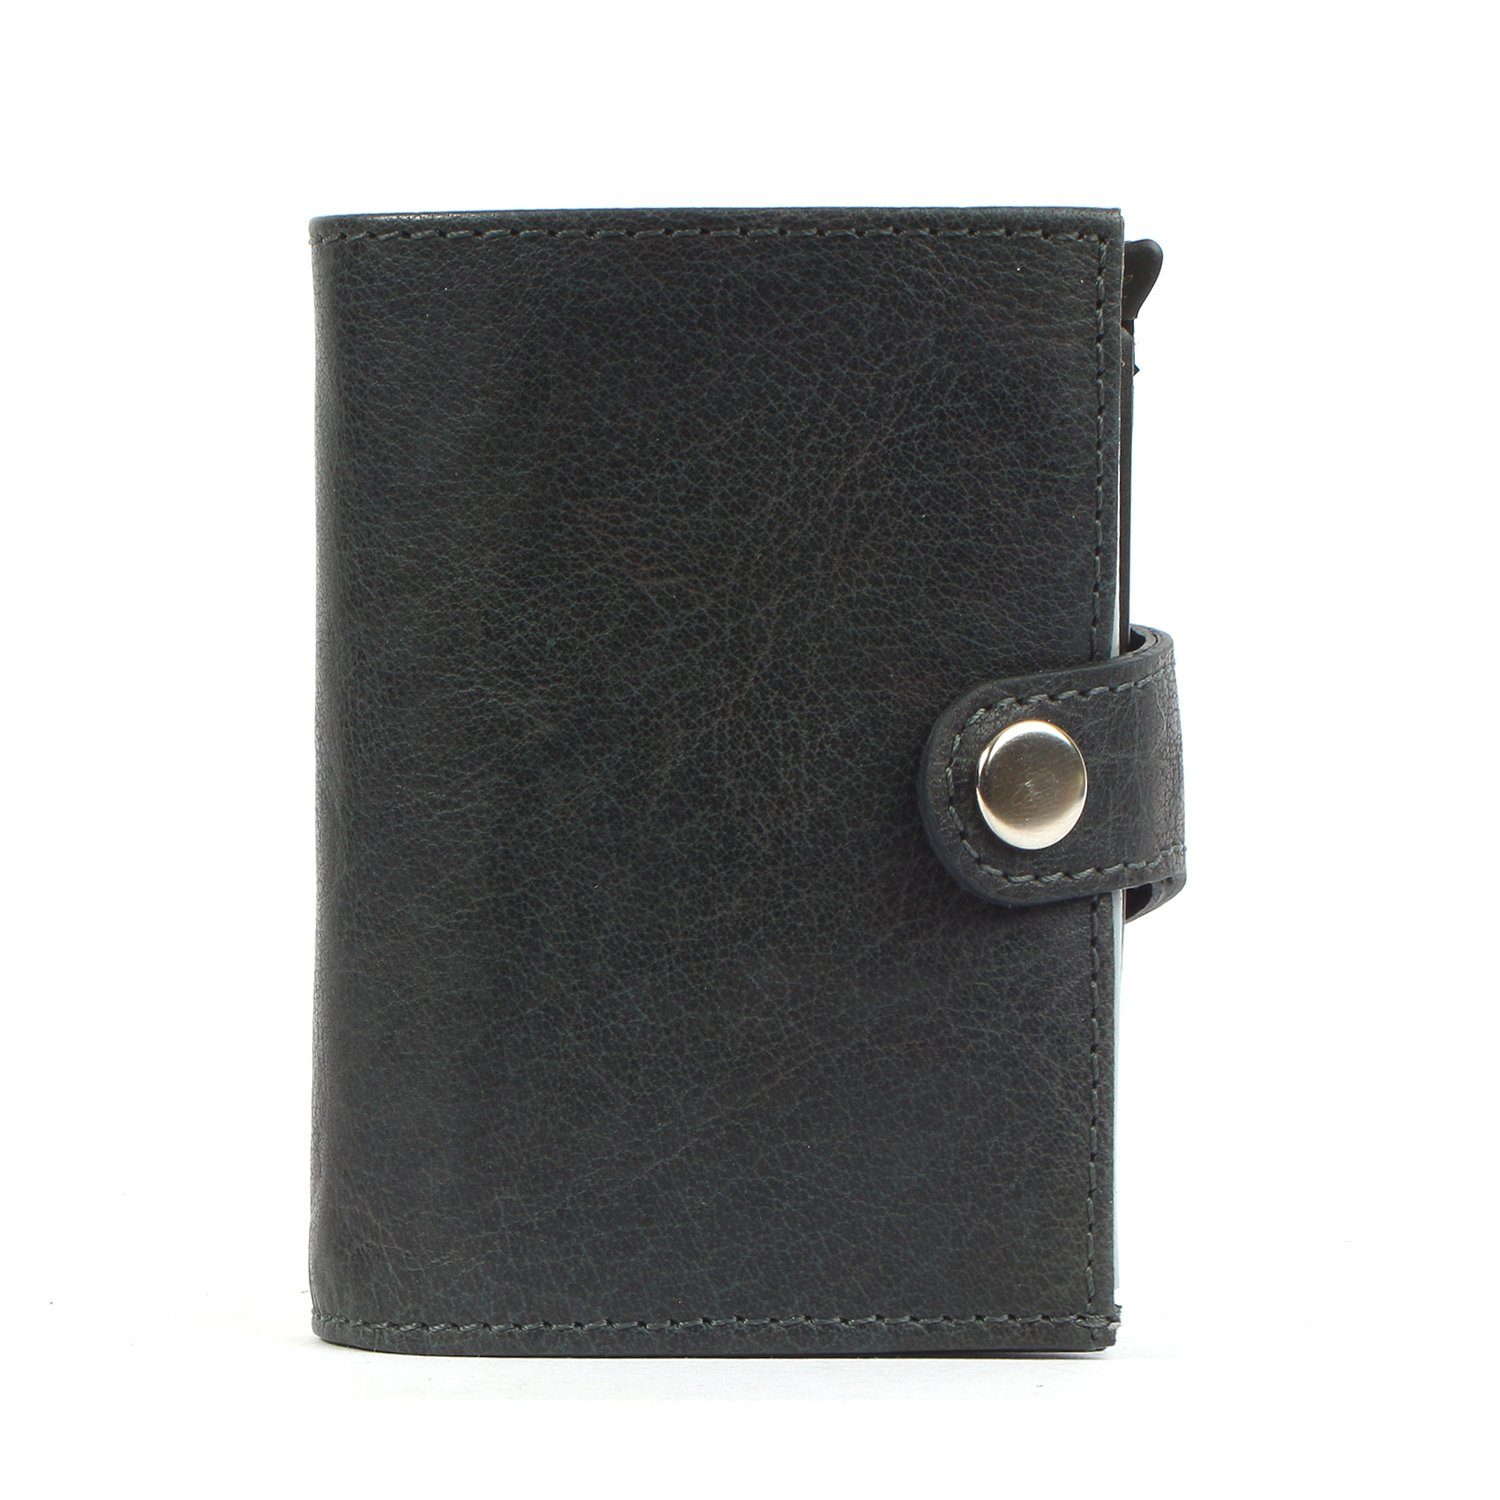 Margelisch Mini Geldbörse noonyu double leather, RFID Kreditkartenbörse aus Upcycling Leder steelblue